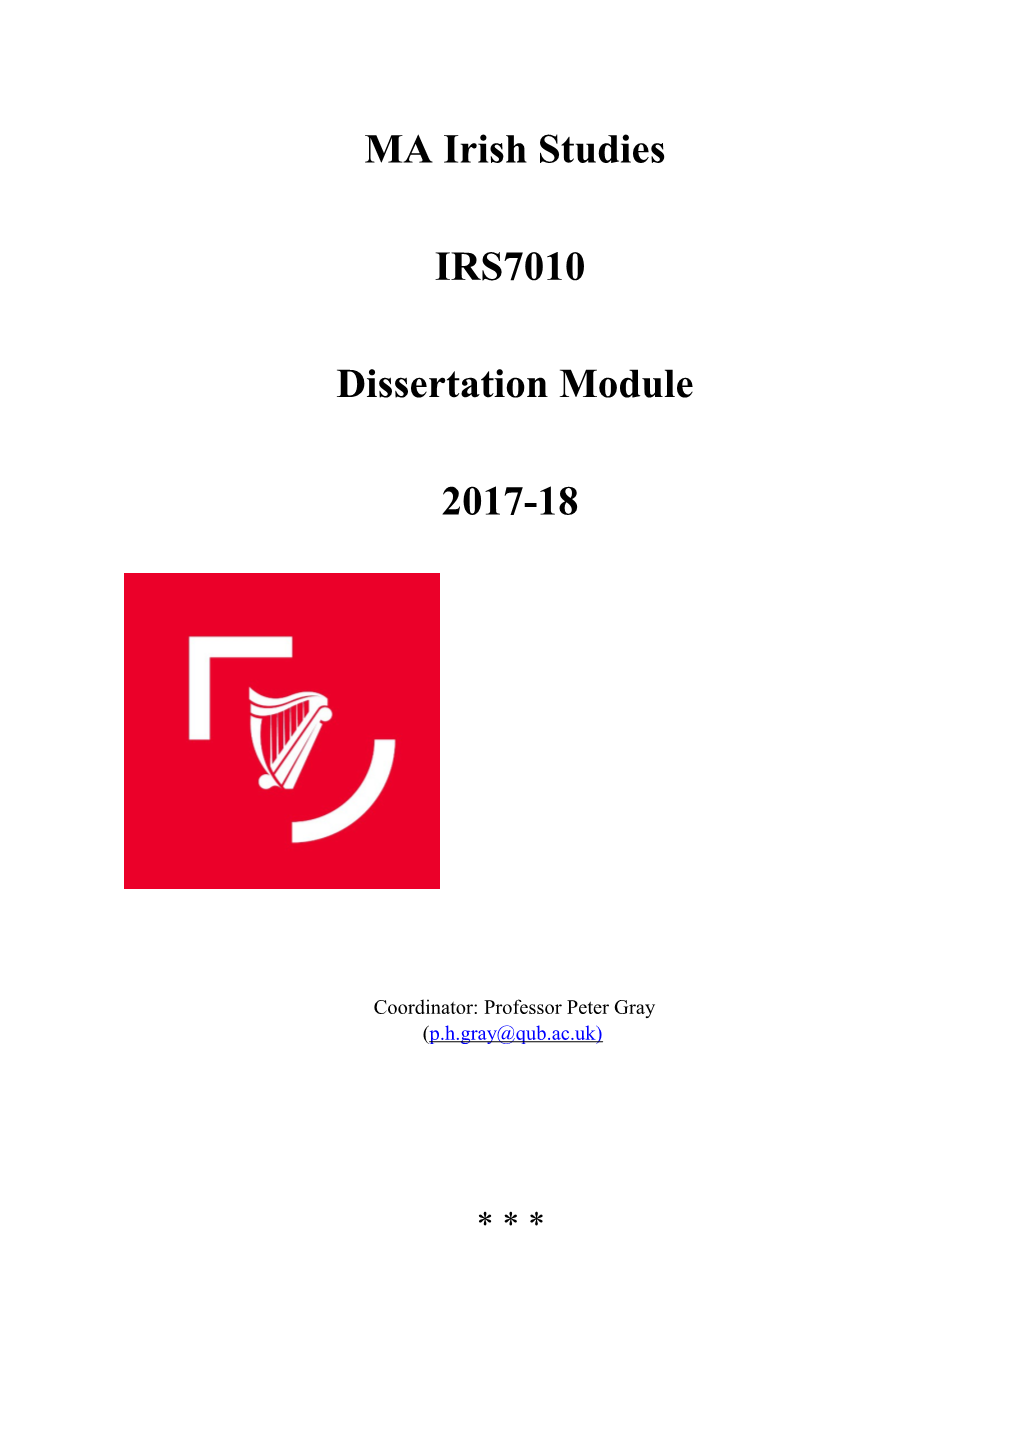 MHY7010 Module Guide 2014-15 Revised Jan 2015